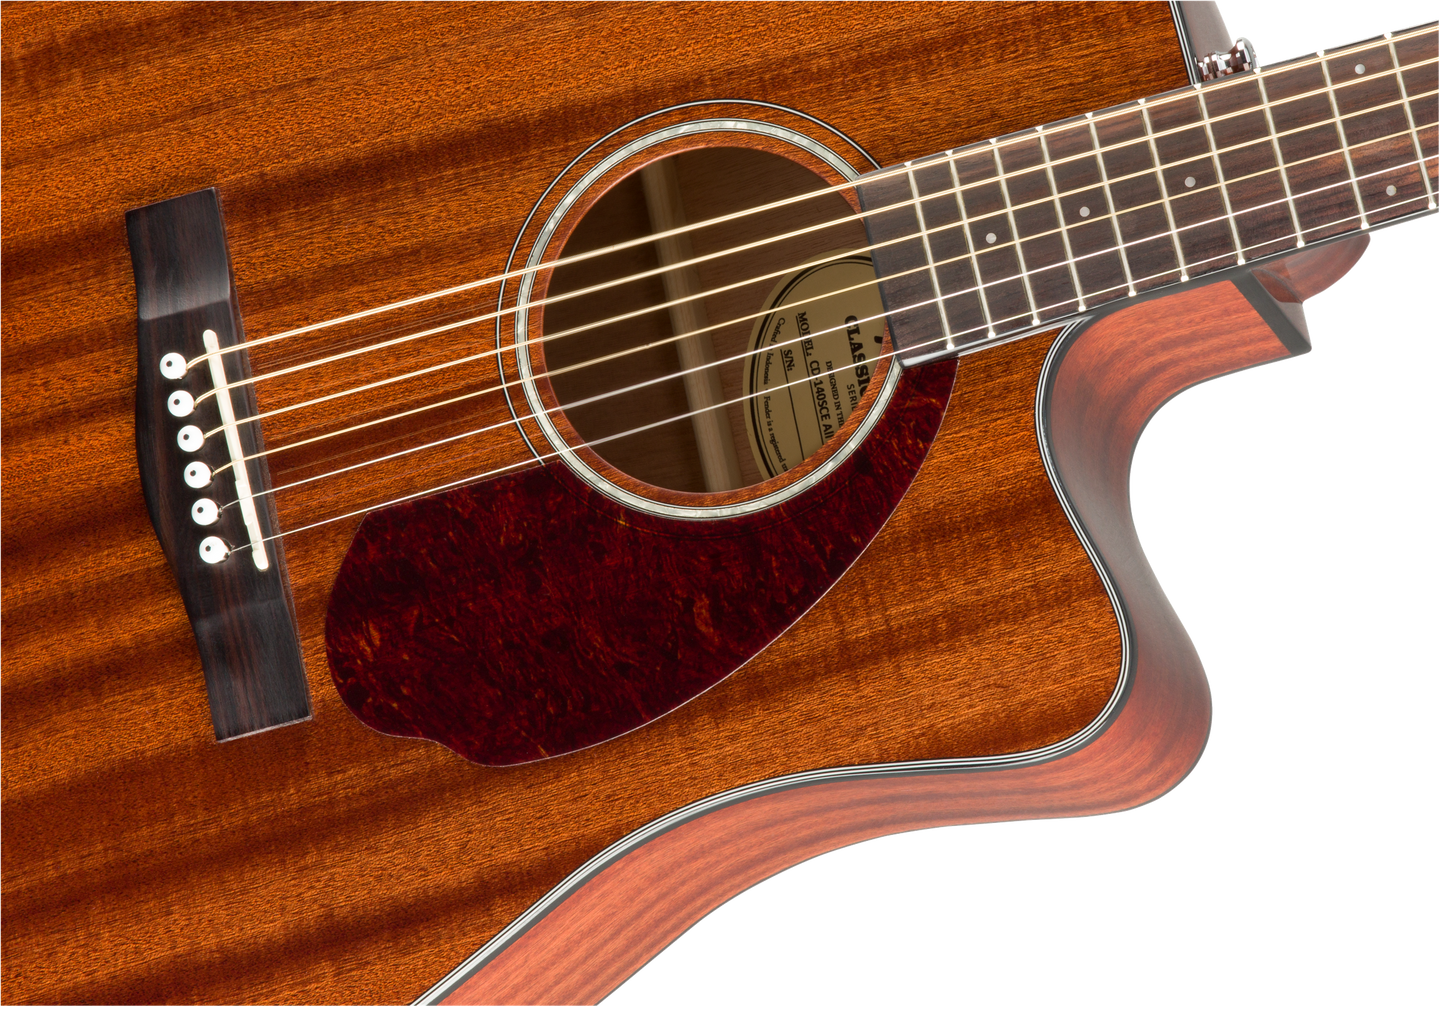 Fender CD-140SCE All-Mahogany Acoustic Guitar